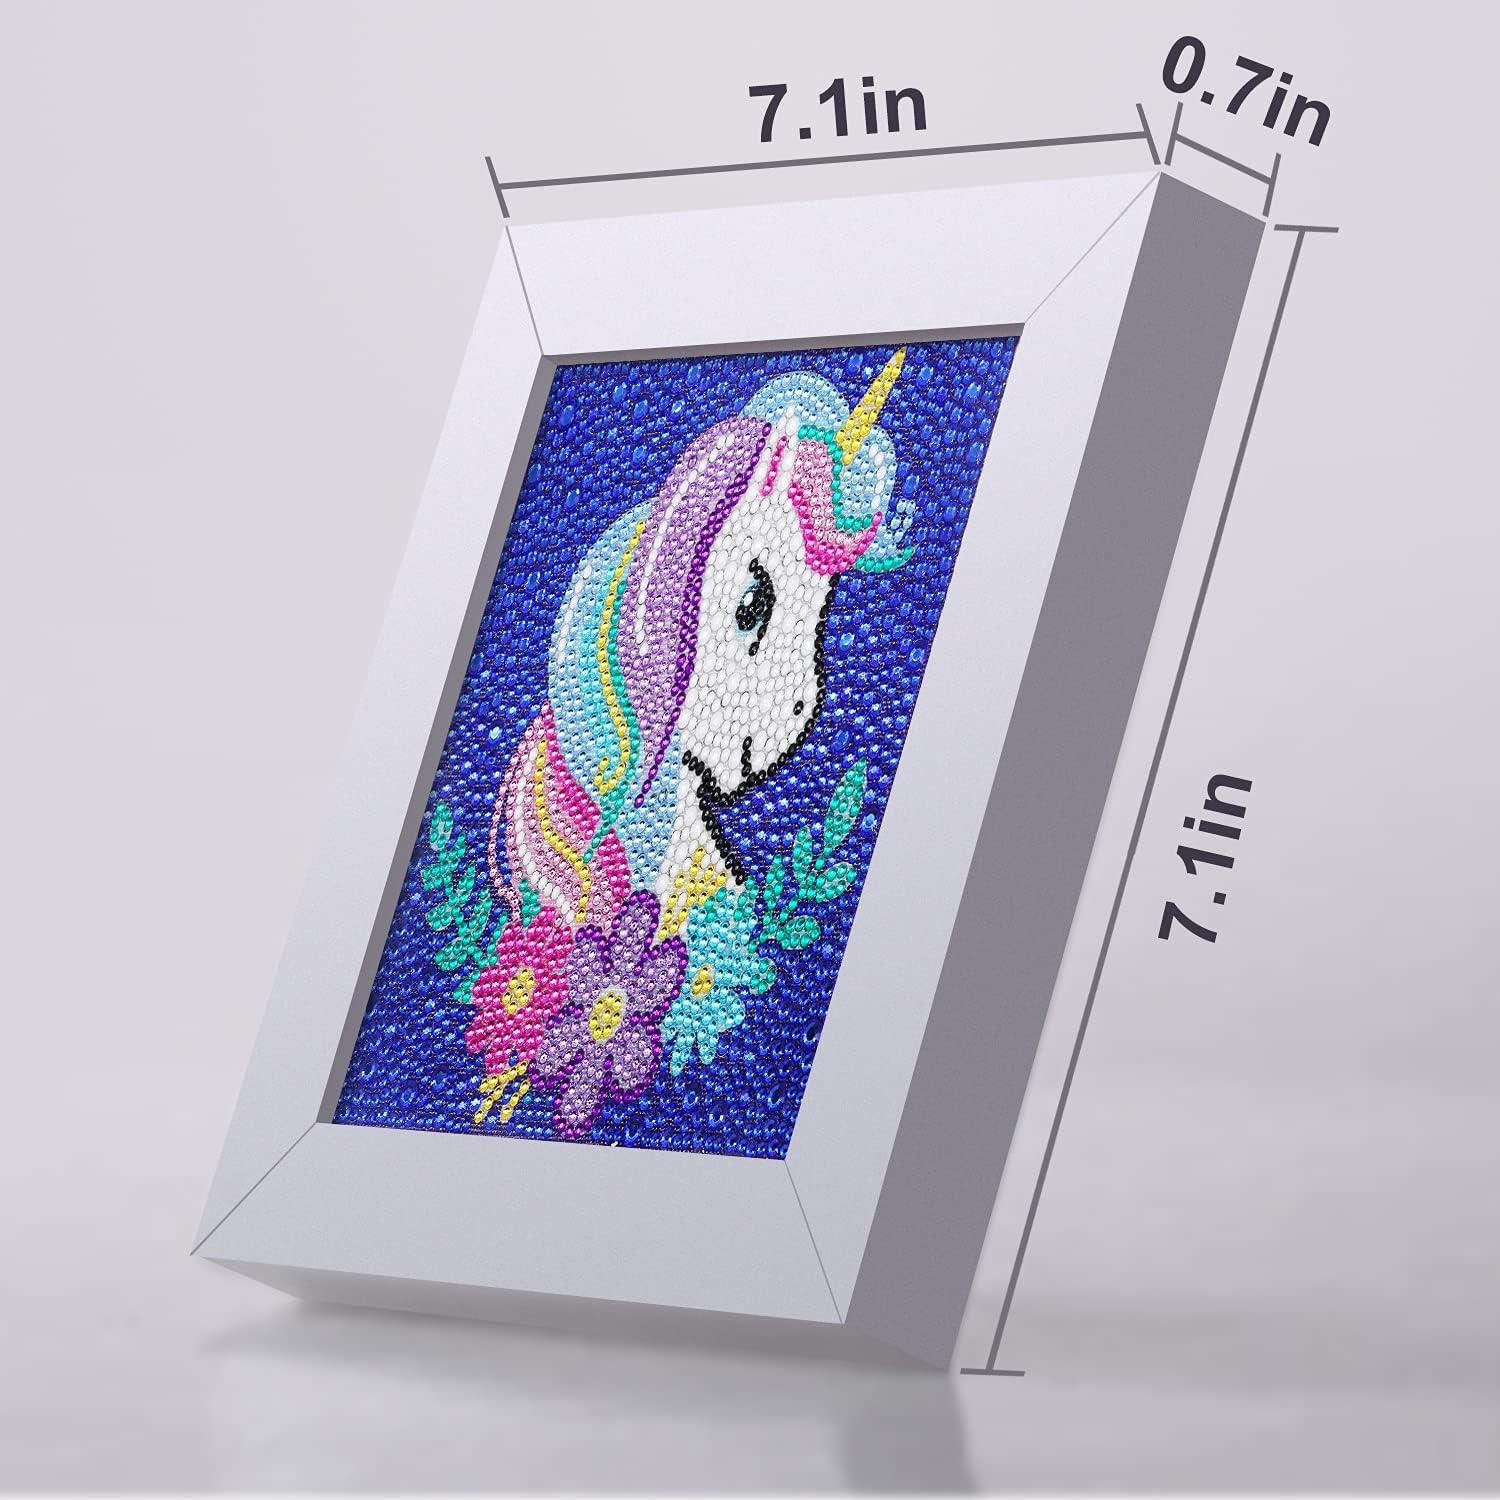 DIY Diamond Painting Sticker Kits for Kids Cartoon Stitch Diamond Mosaic  Art Crafts Stickers by Numbers Kit for Children